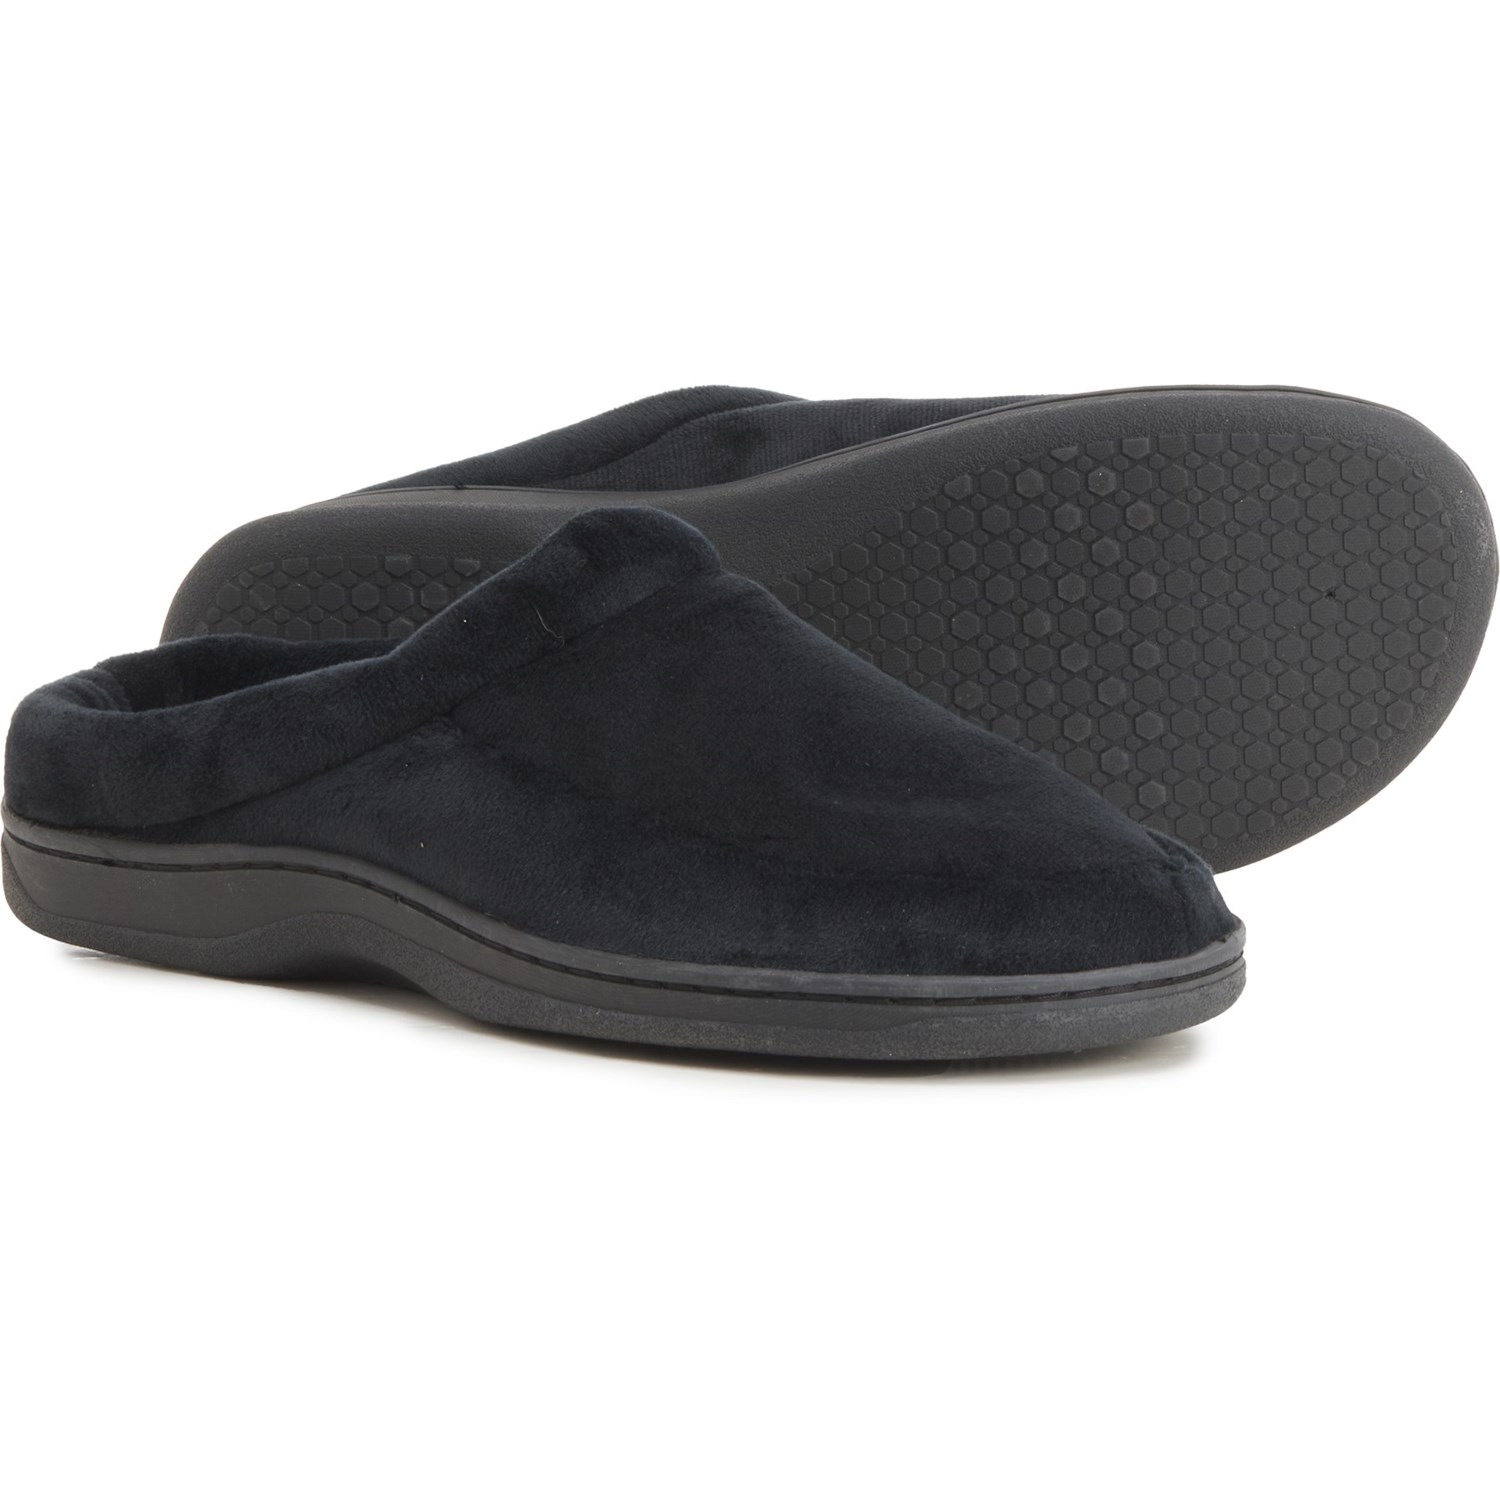 Dearfoams Bradley Velour Moc-Toe Clog Slippers (For Men) - Save 38%